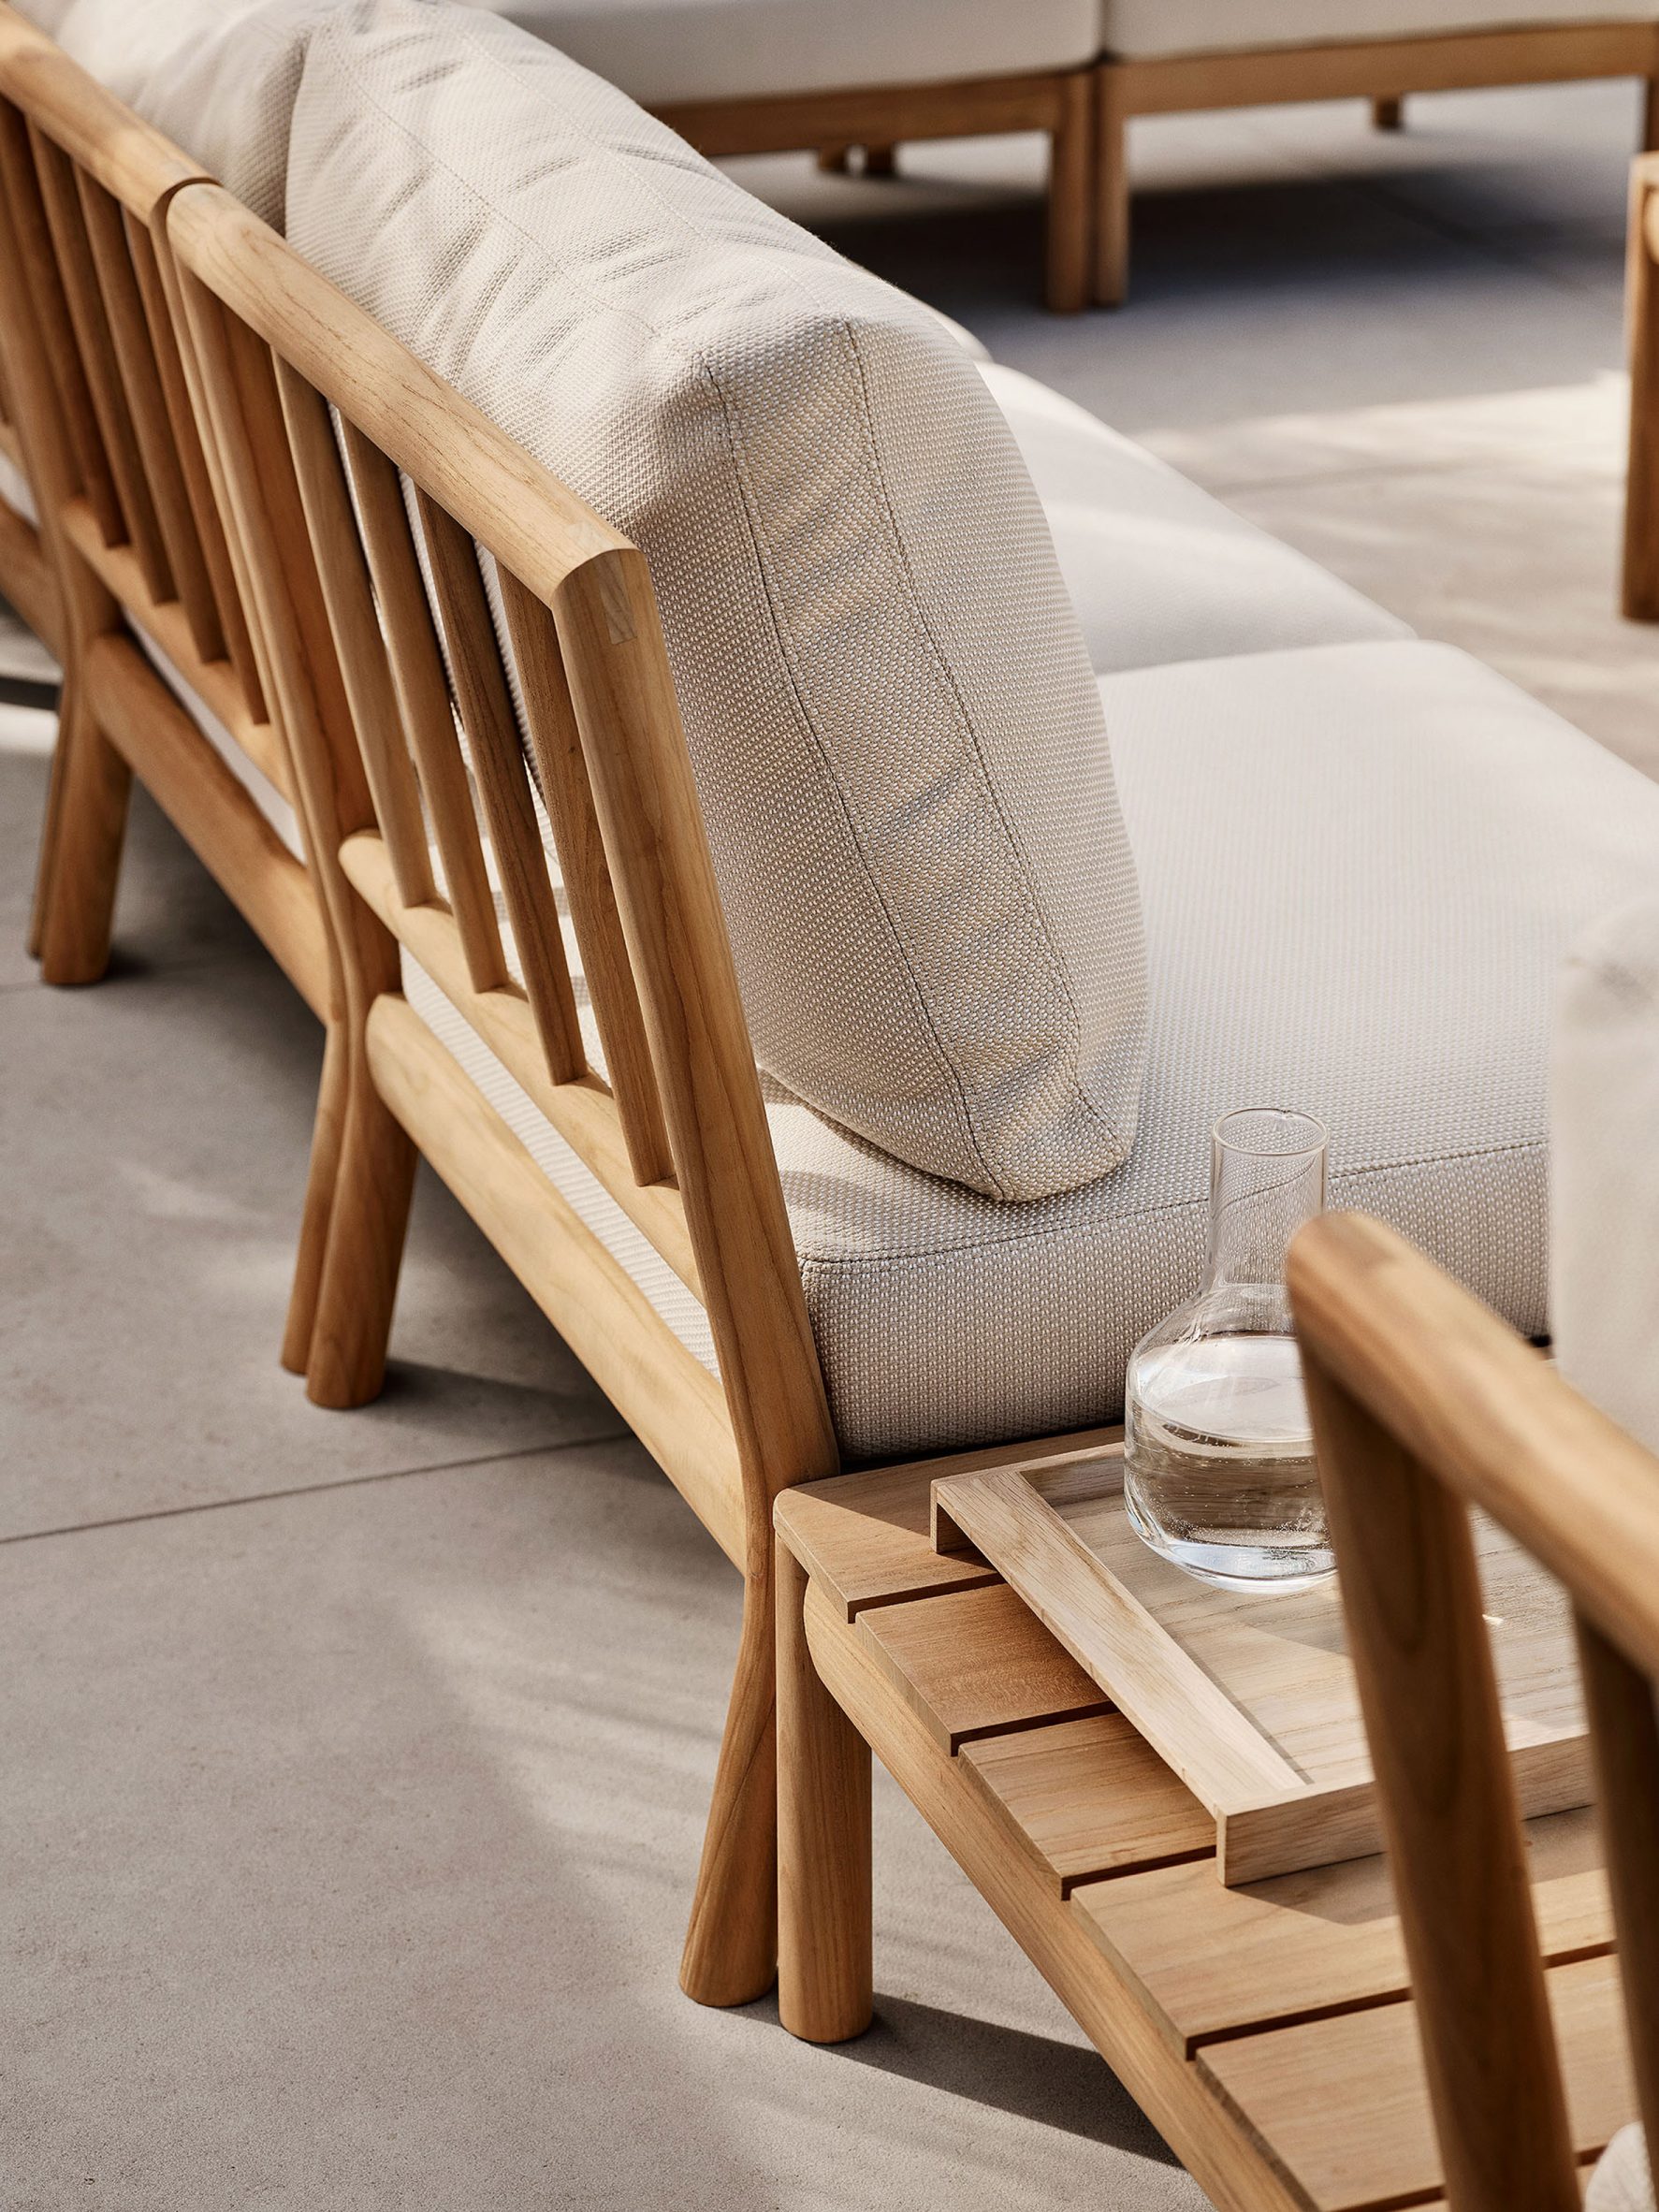 Detail view of Tradition outdoor furniture by Povl B Eskildsen for Fritz Hansen